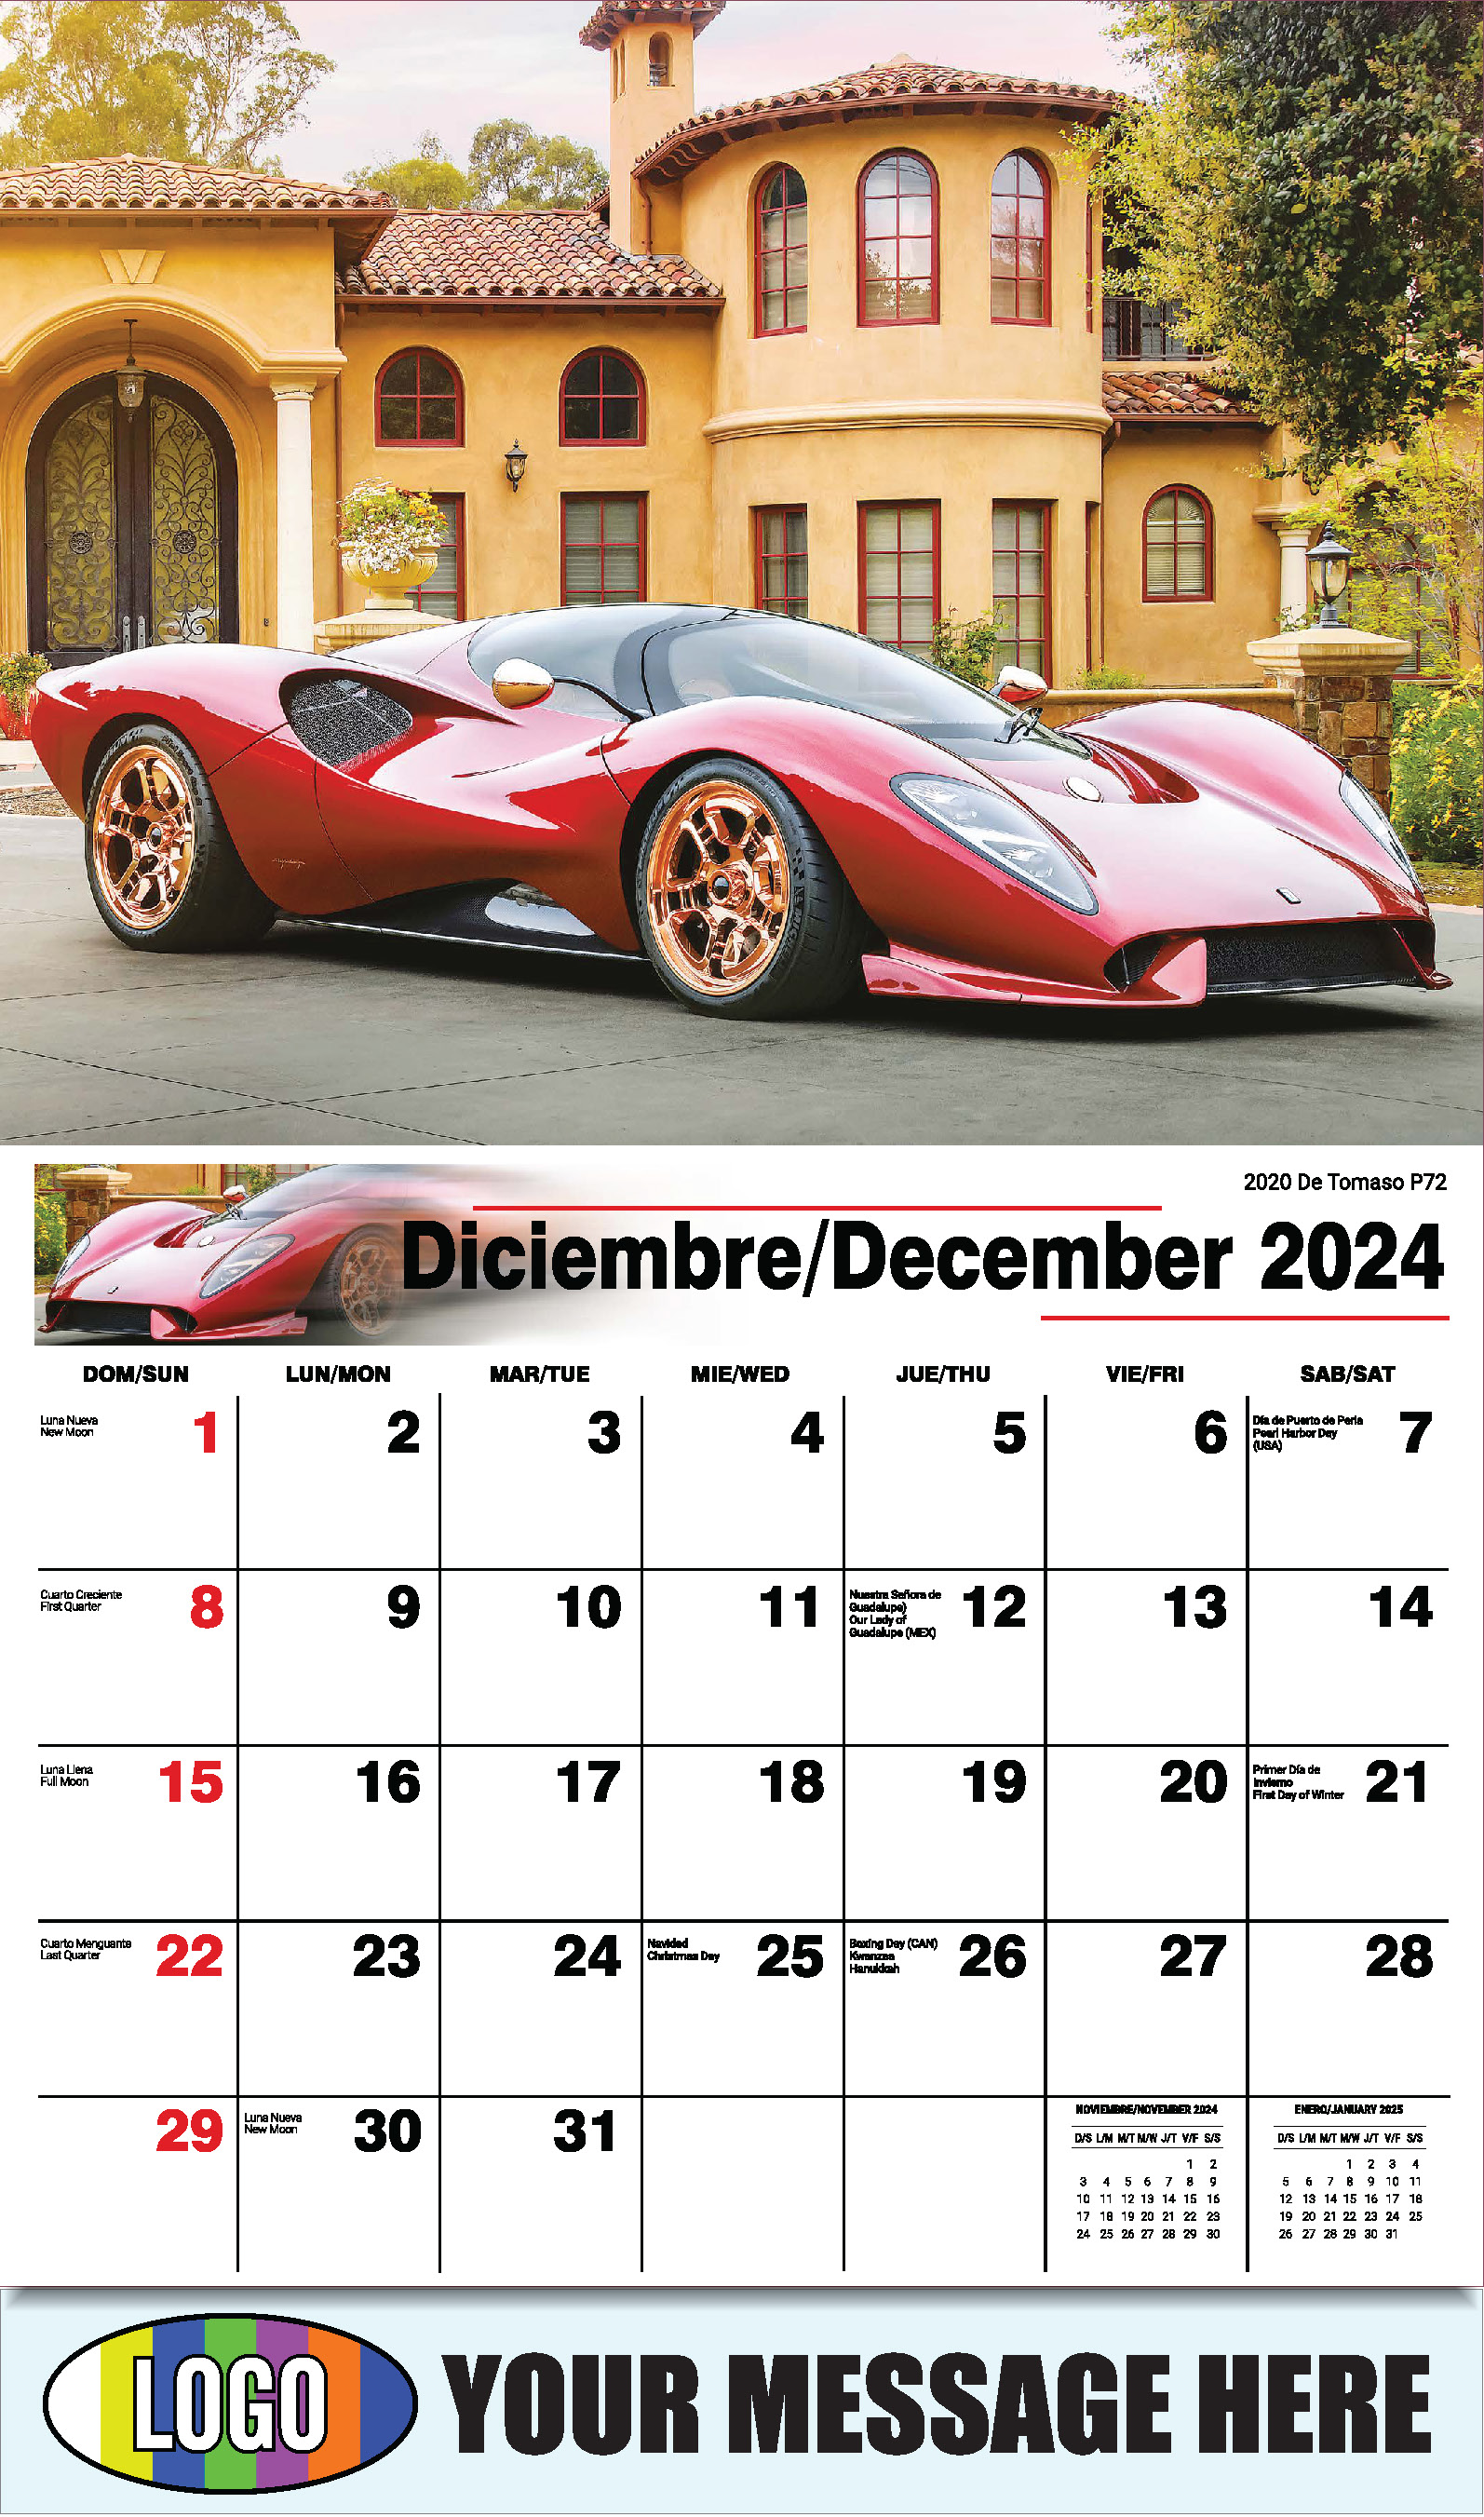 Exotic Cars 2025 Bilingual Automotive Business Promotional Calendar - December_a